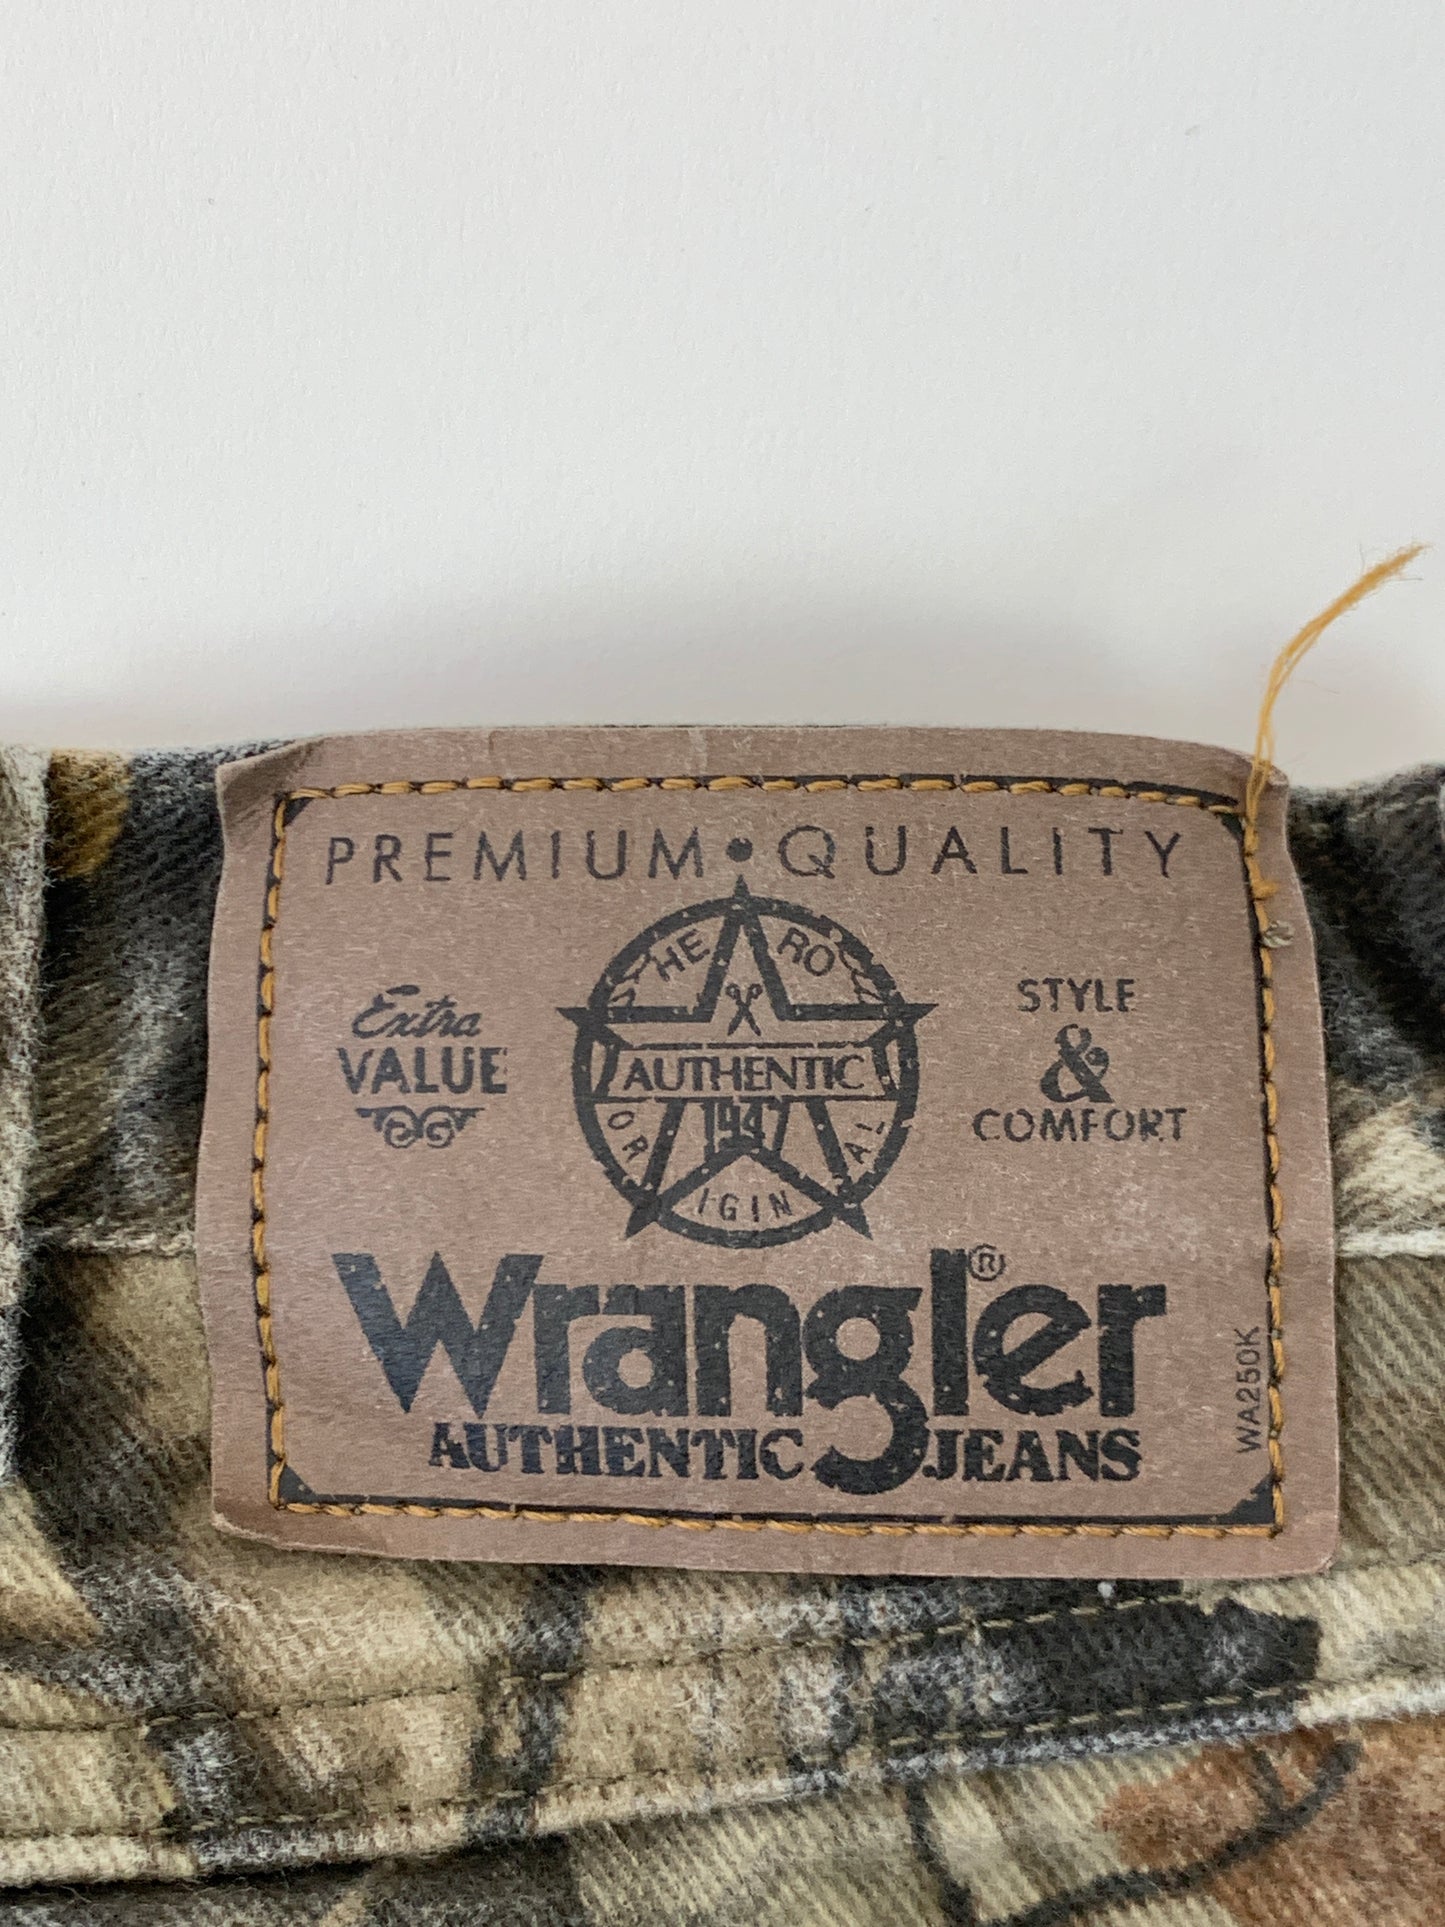 Wrangler Realtree Double Knee Vintage Camo Pants - 32